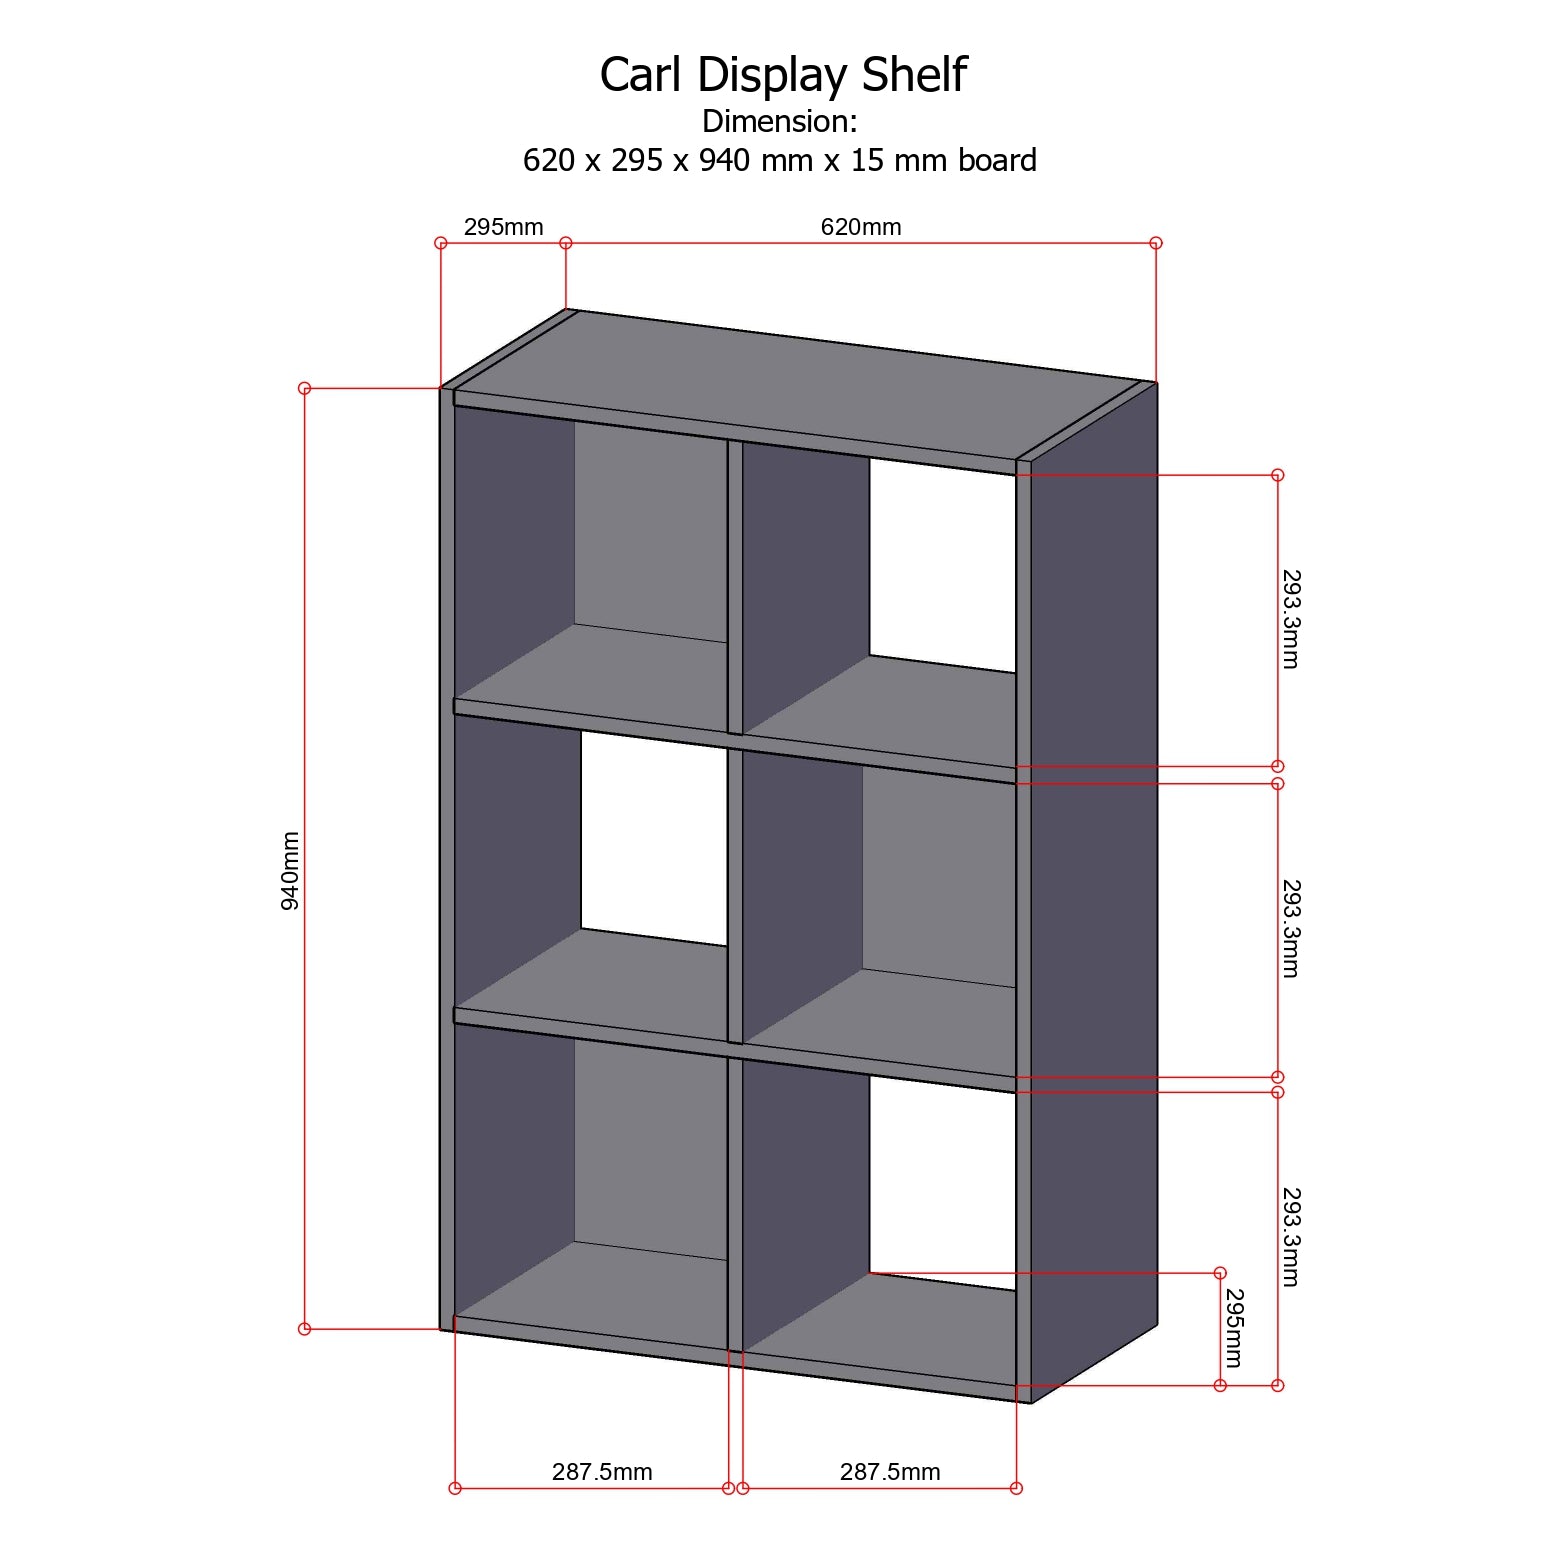 CARL Multipurpose Display Shelf AF Home